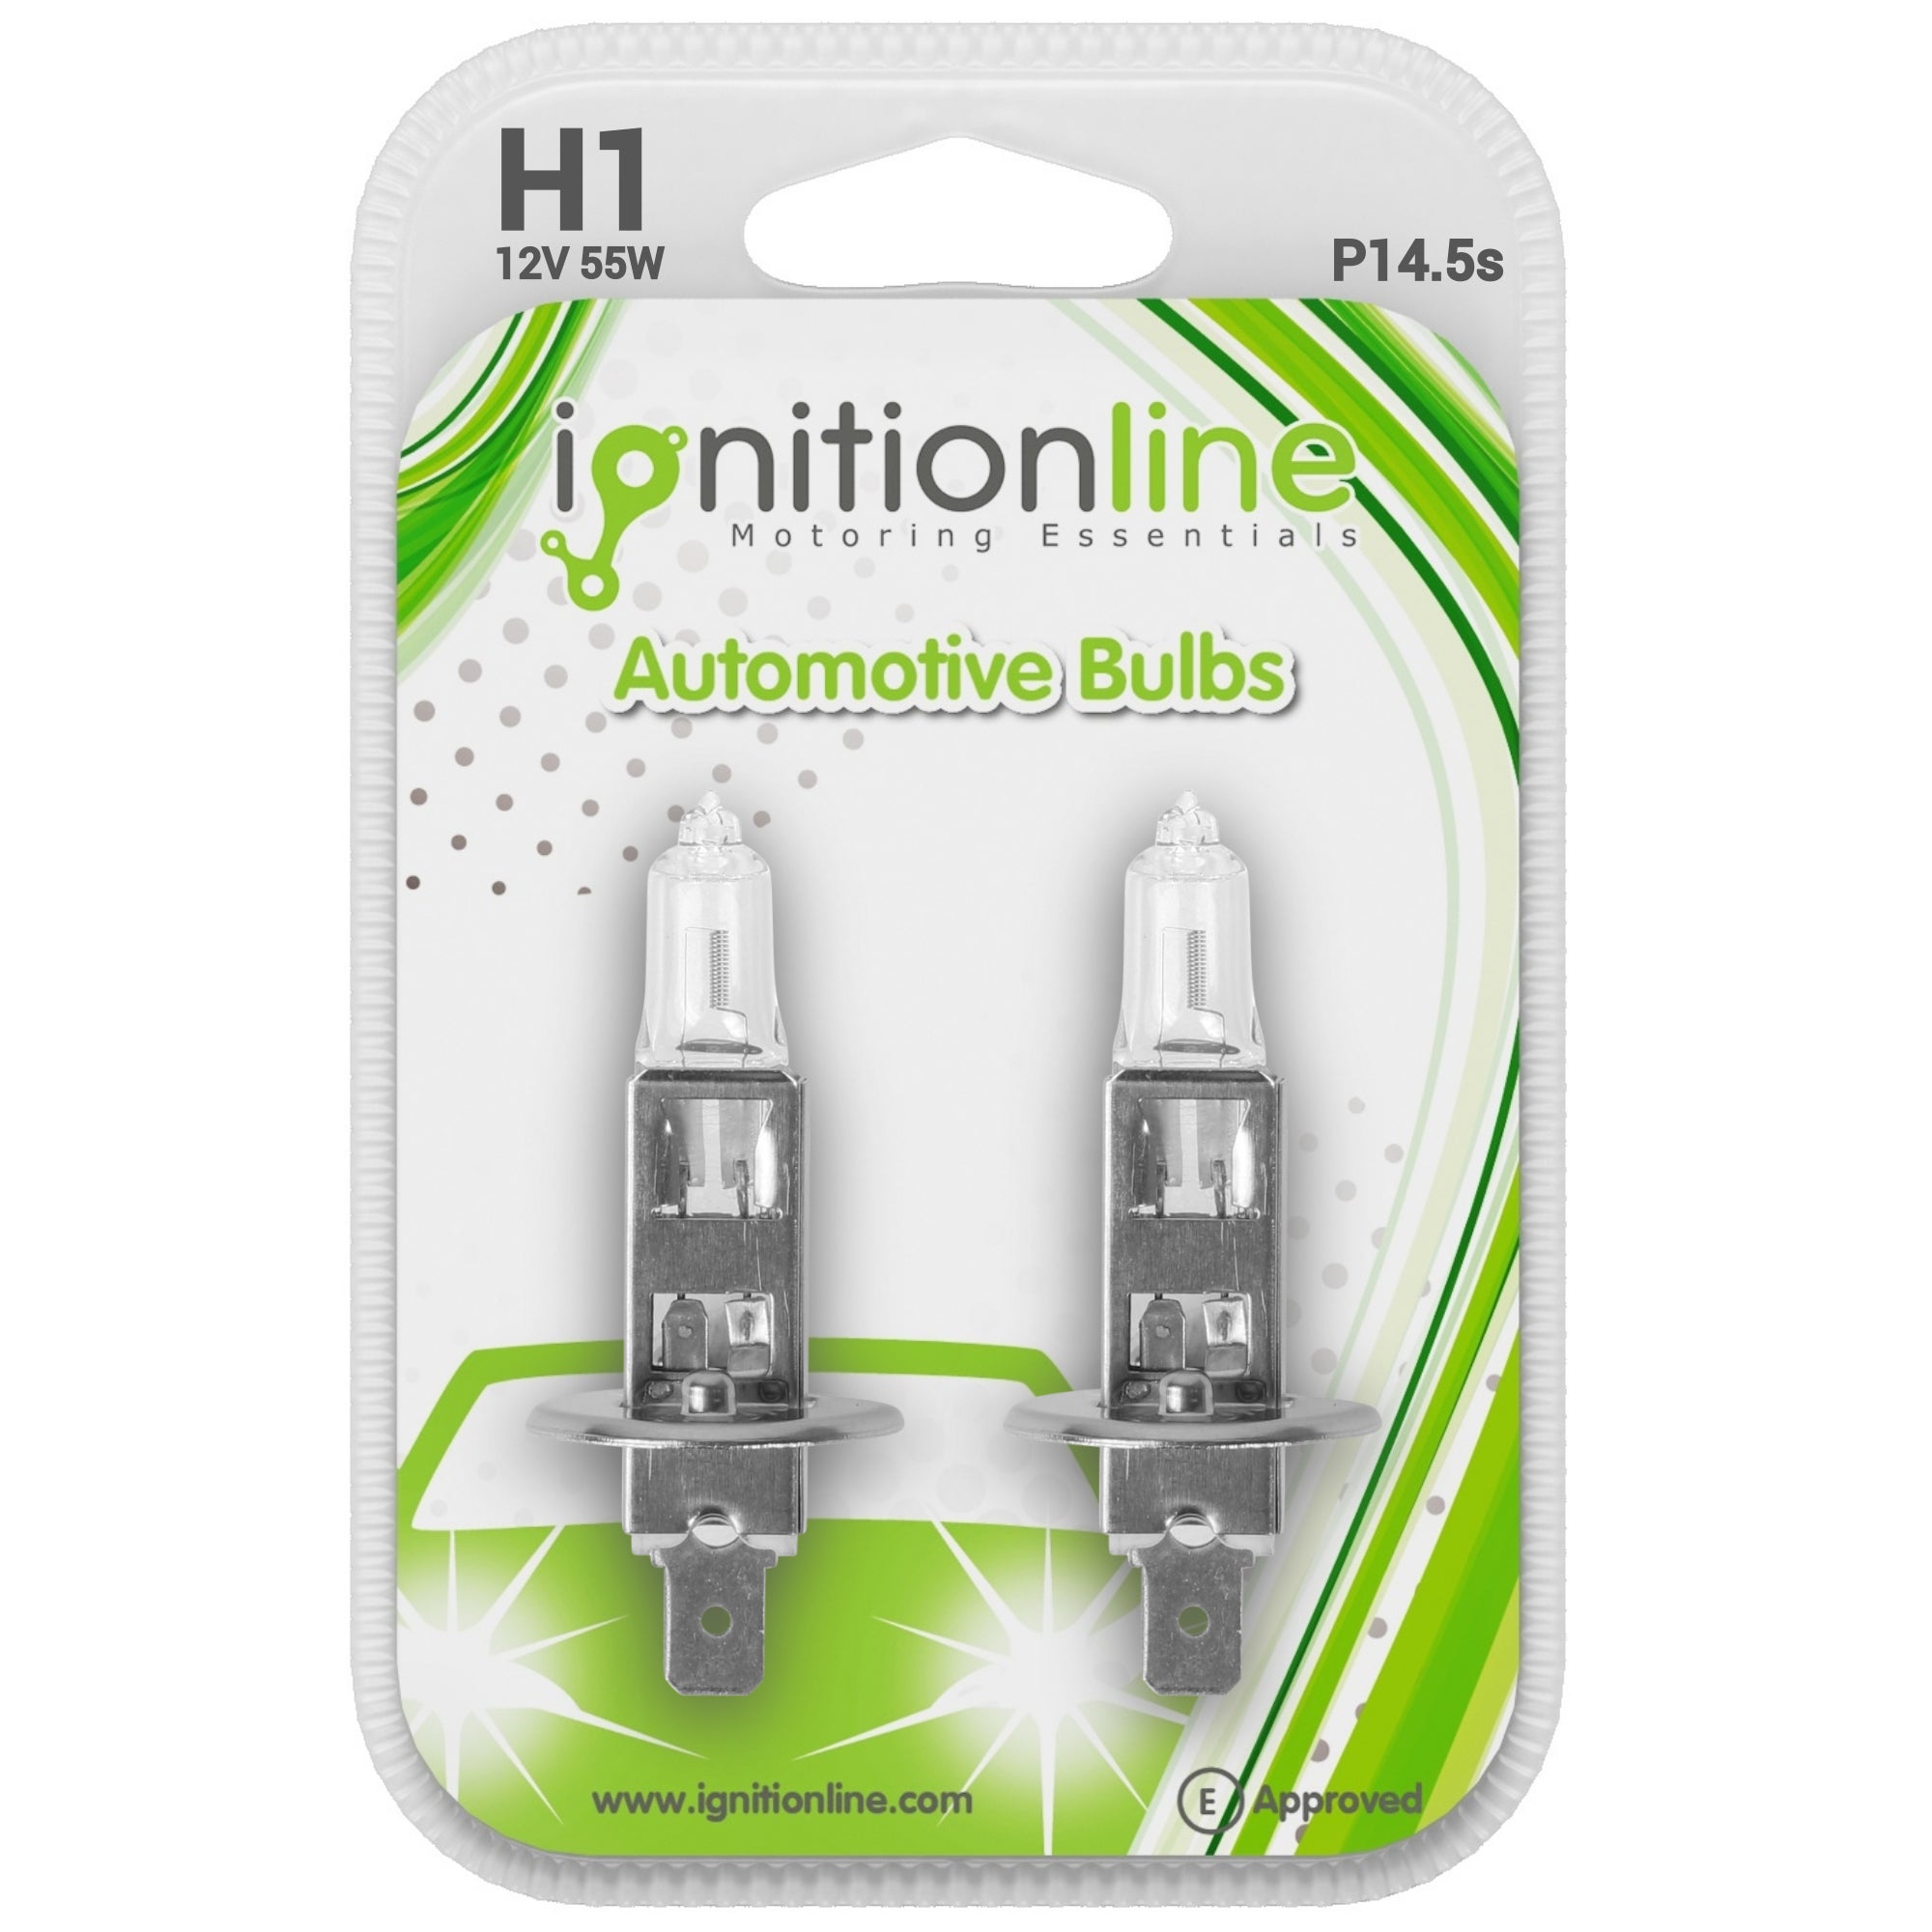 IgnitionLine H1 12V 55W Halogen Headlight Bulbs (Twin Pack)